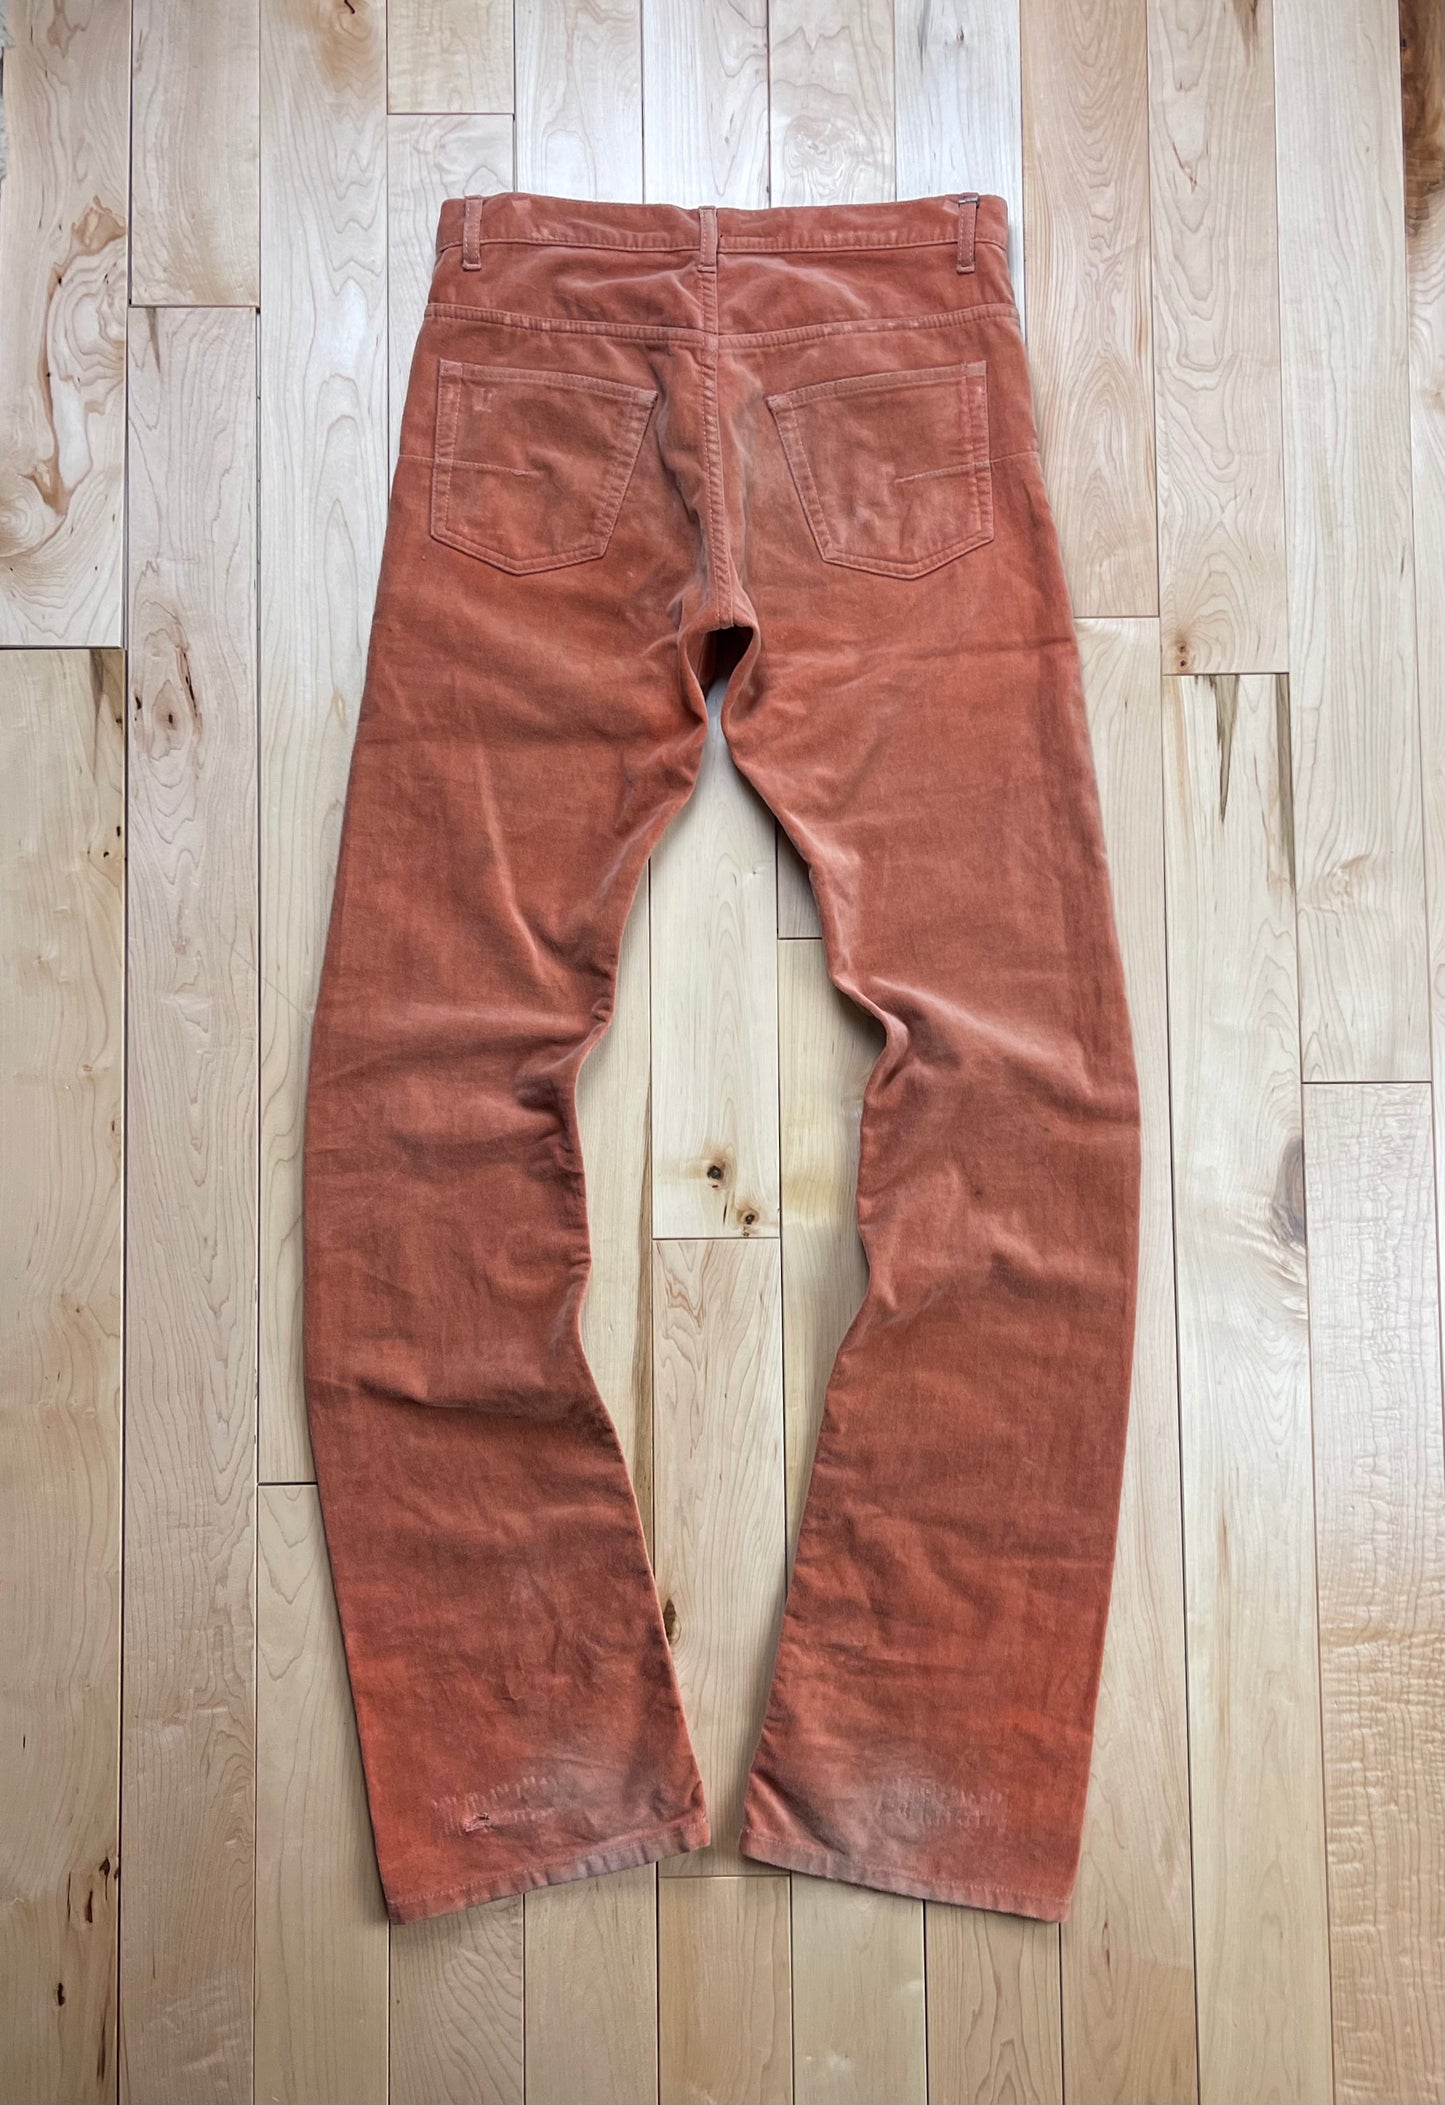 Dior Homme by Hedi Slimane Orange Corduroy Flared Pants